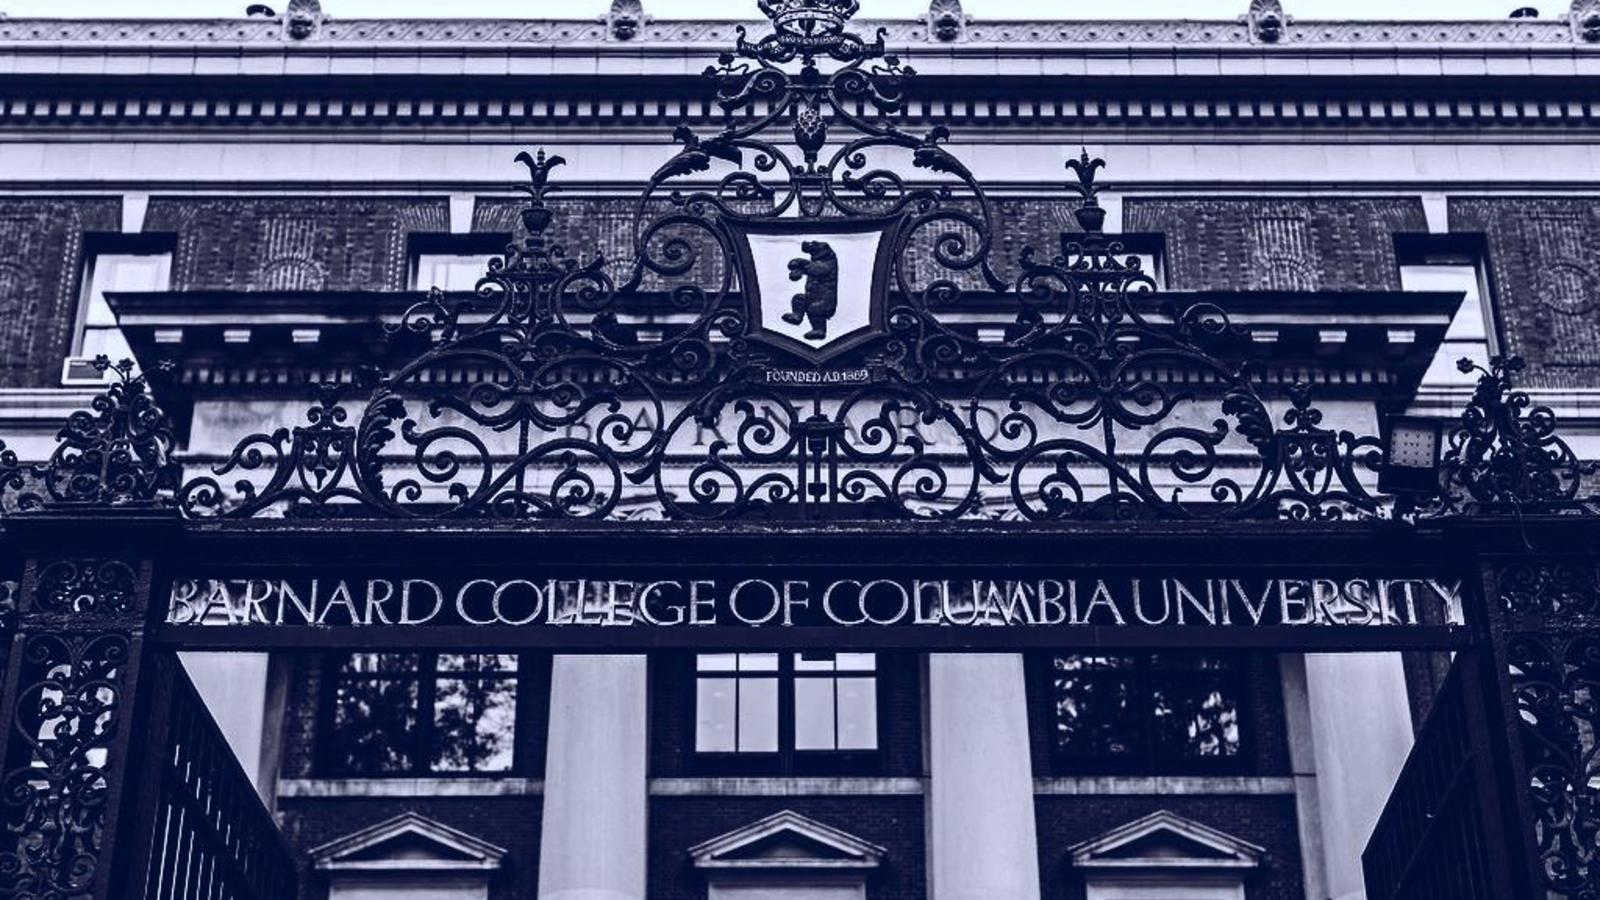 Barnard College gate